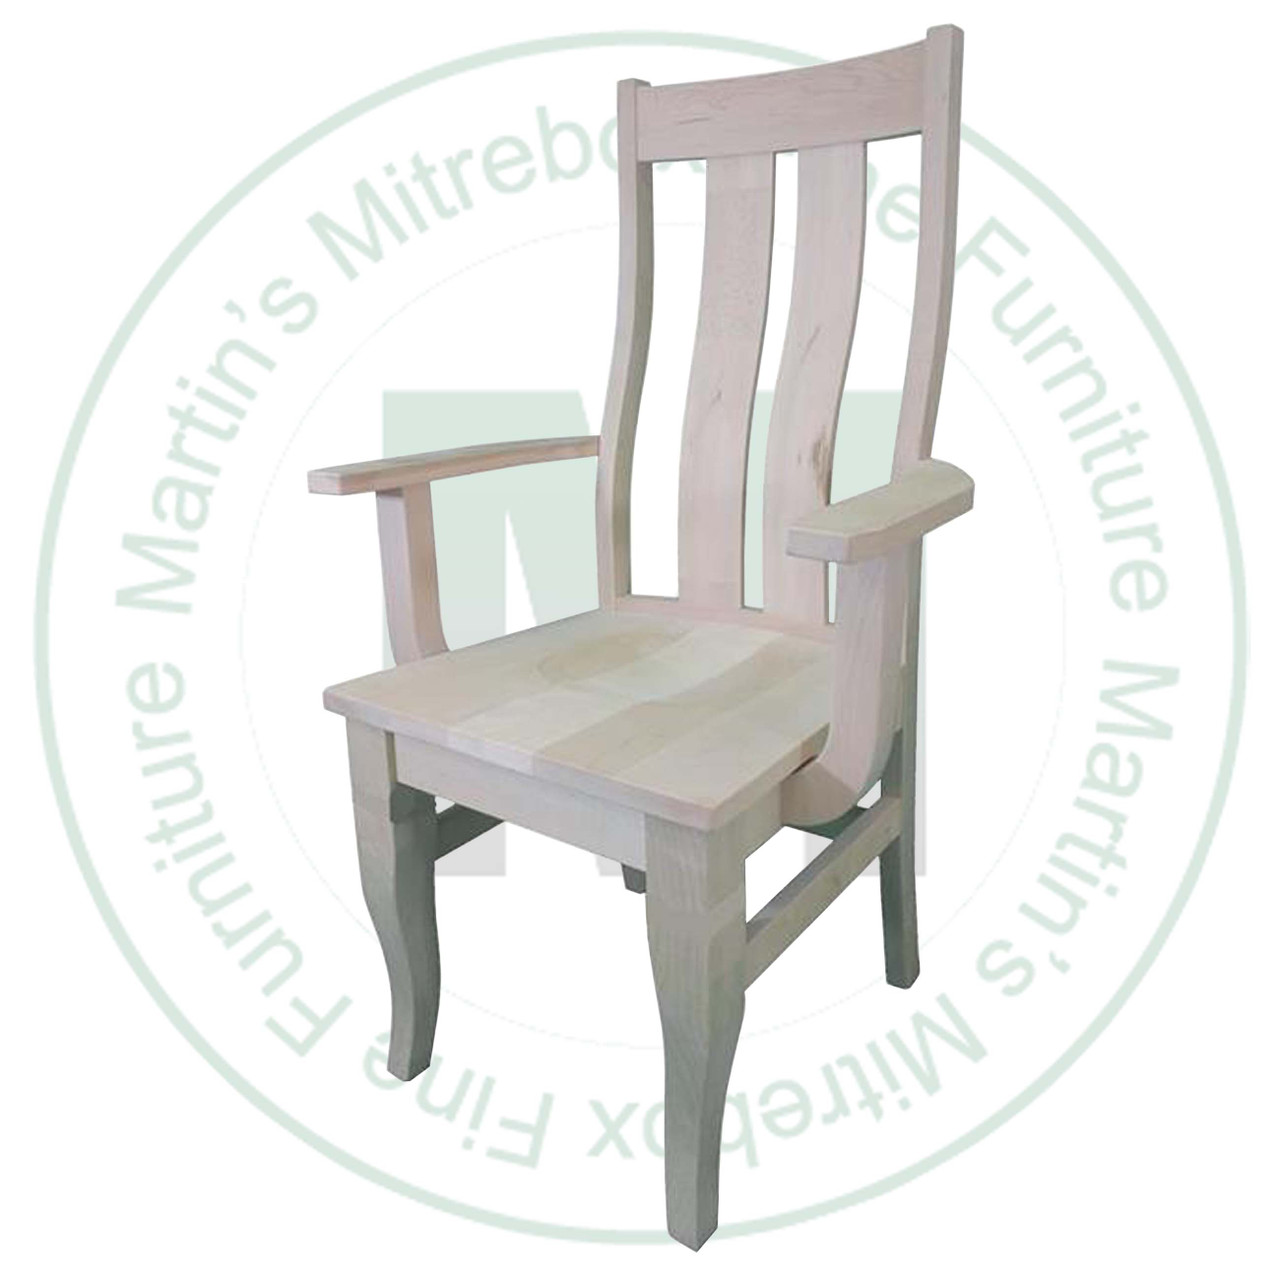 Oak Thomson Arm Chair Has Wood Seat